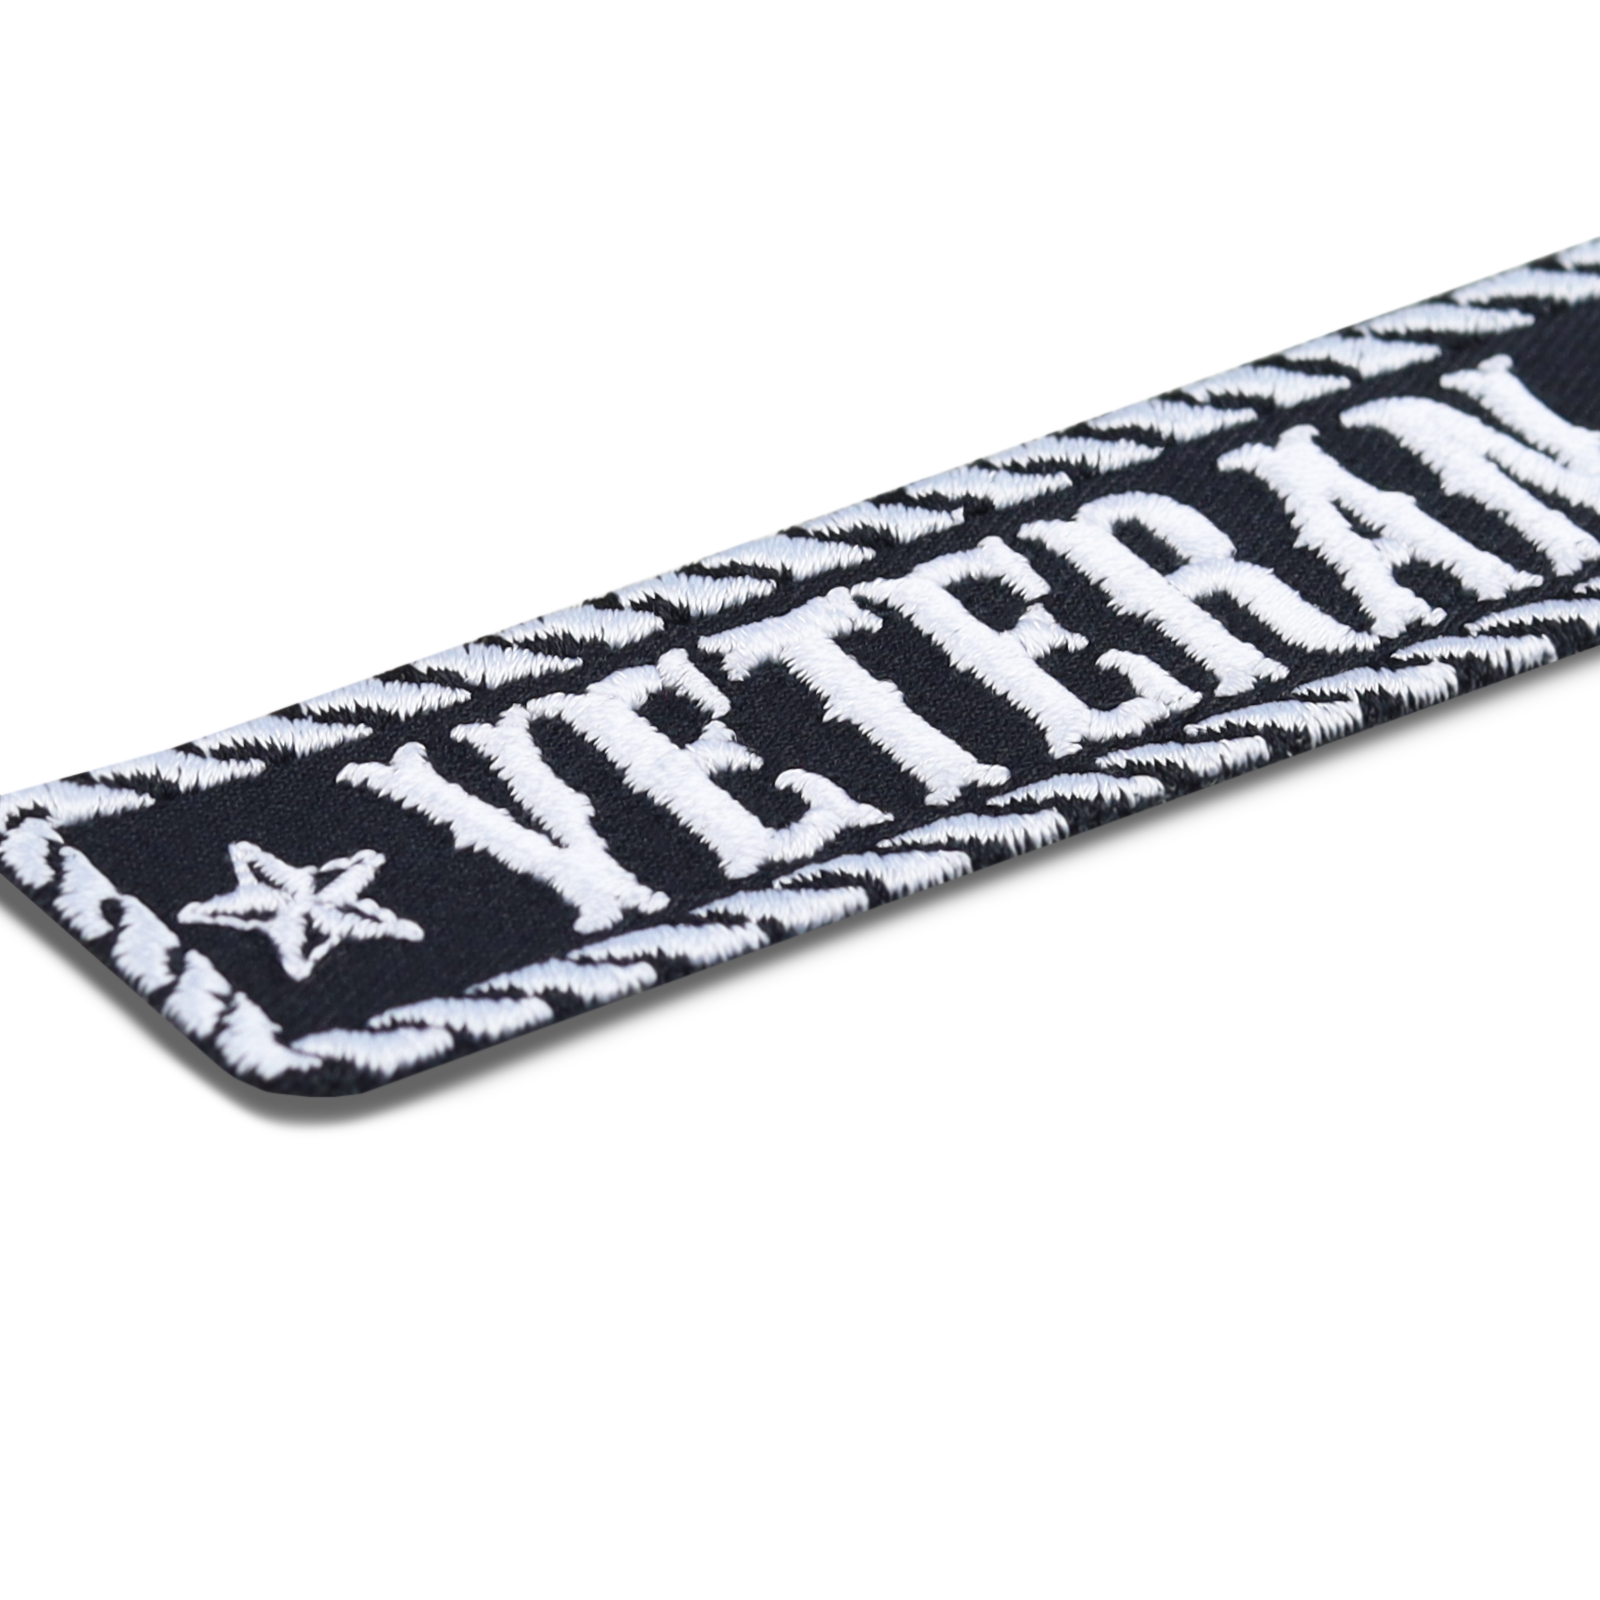 Veteran - Patch